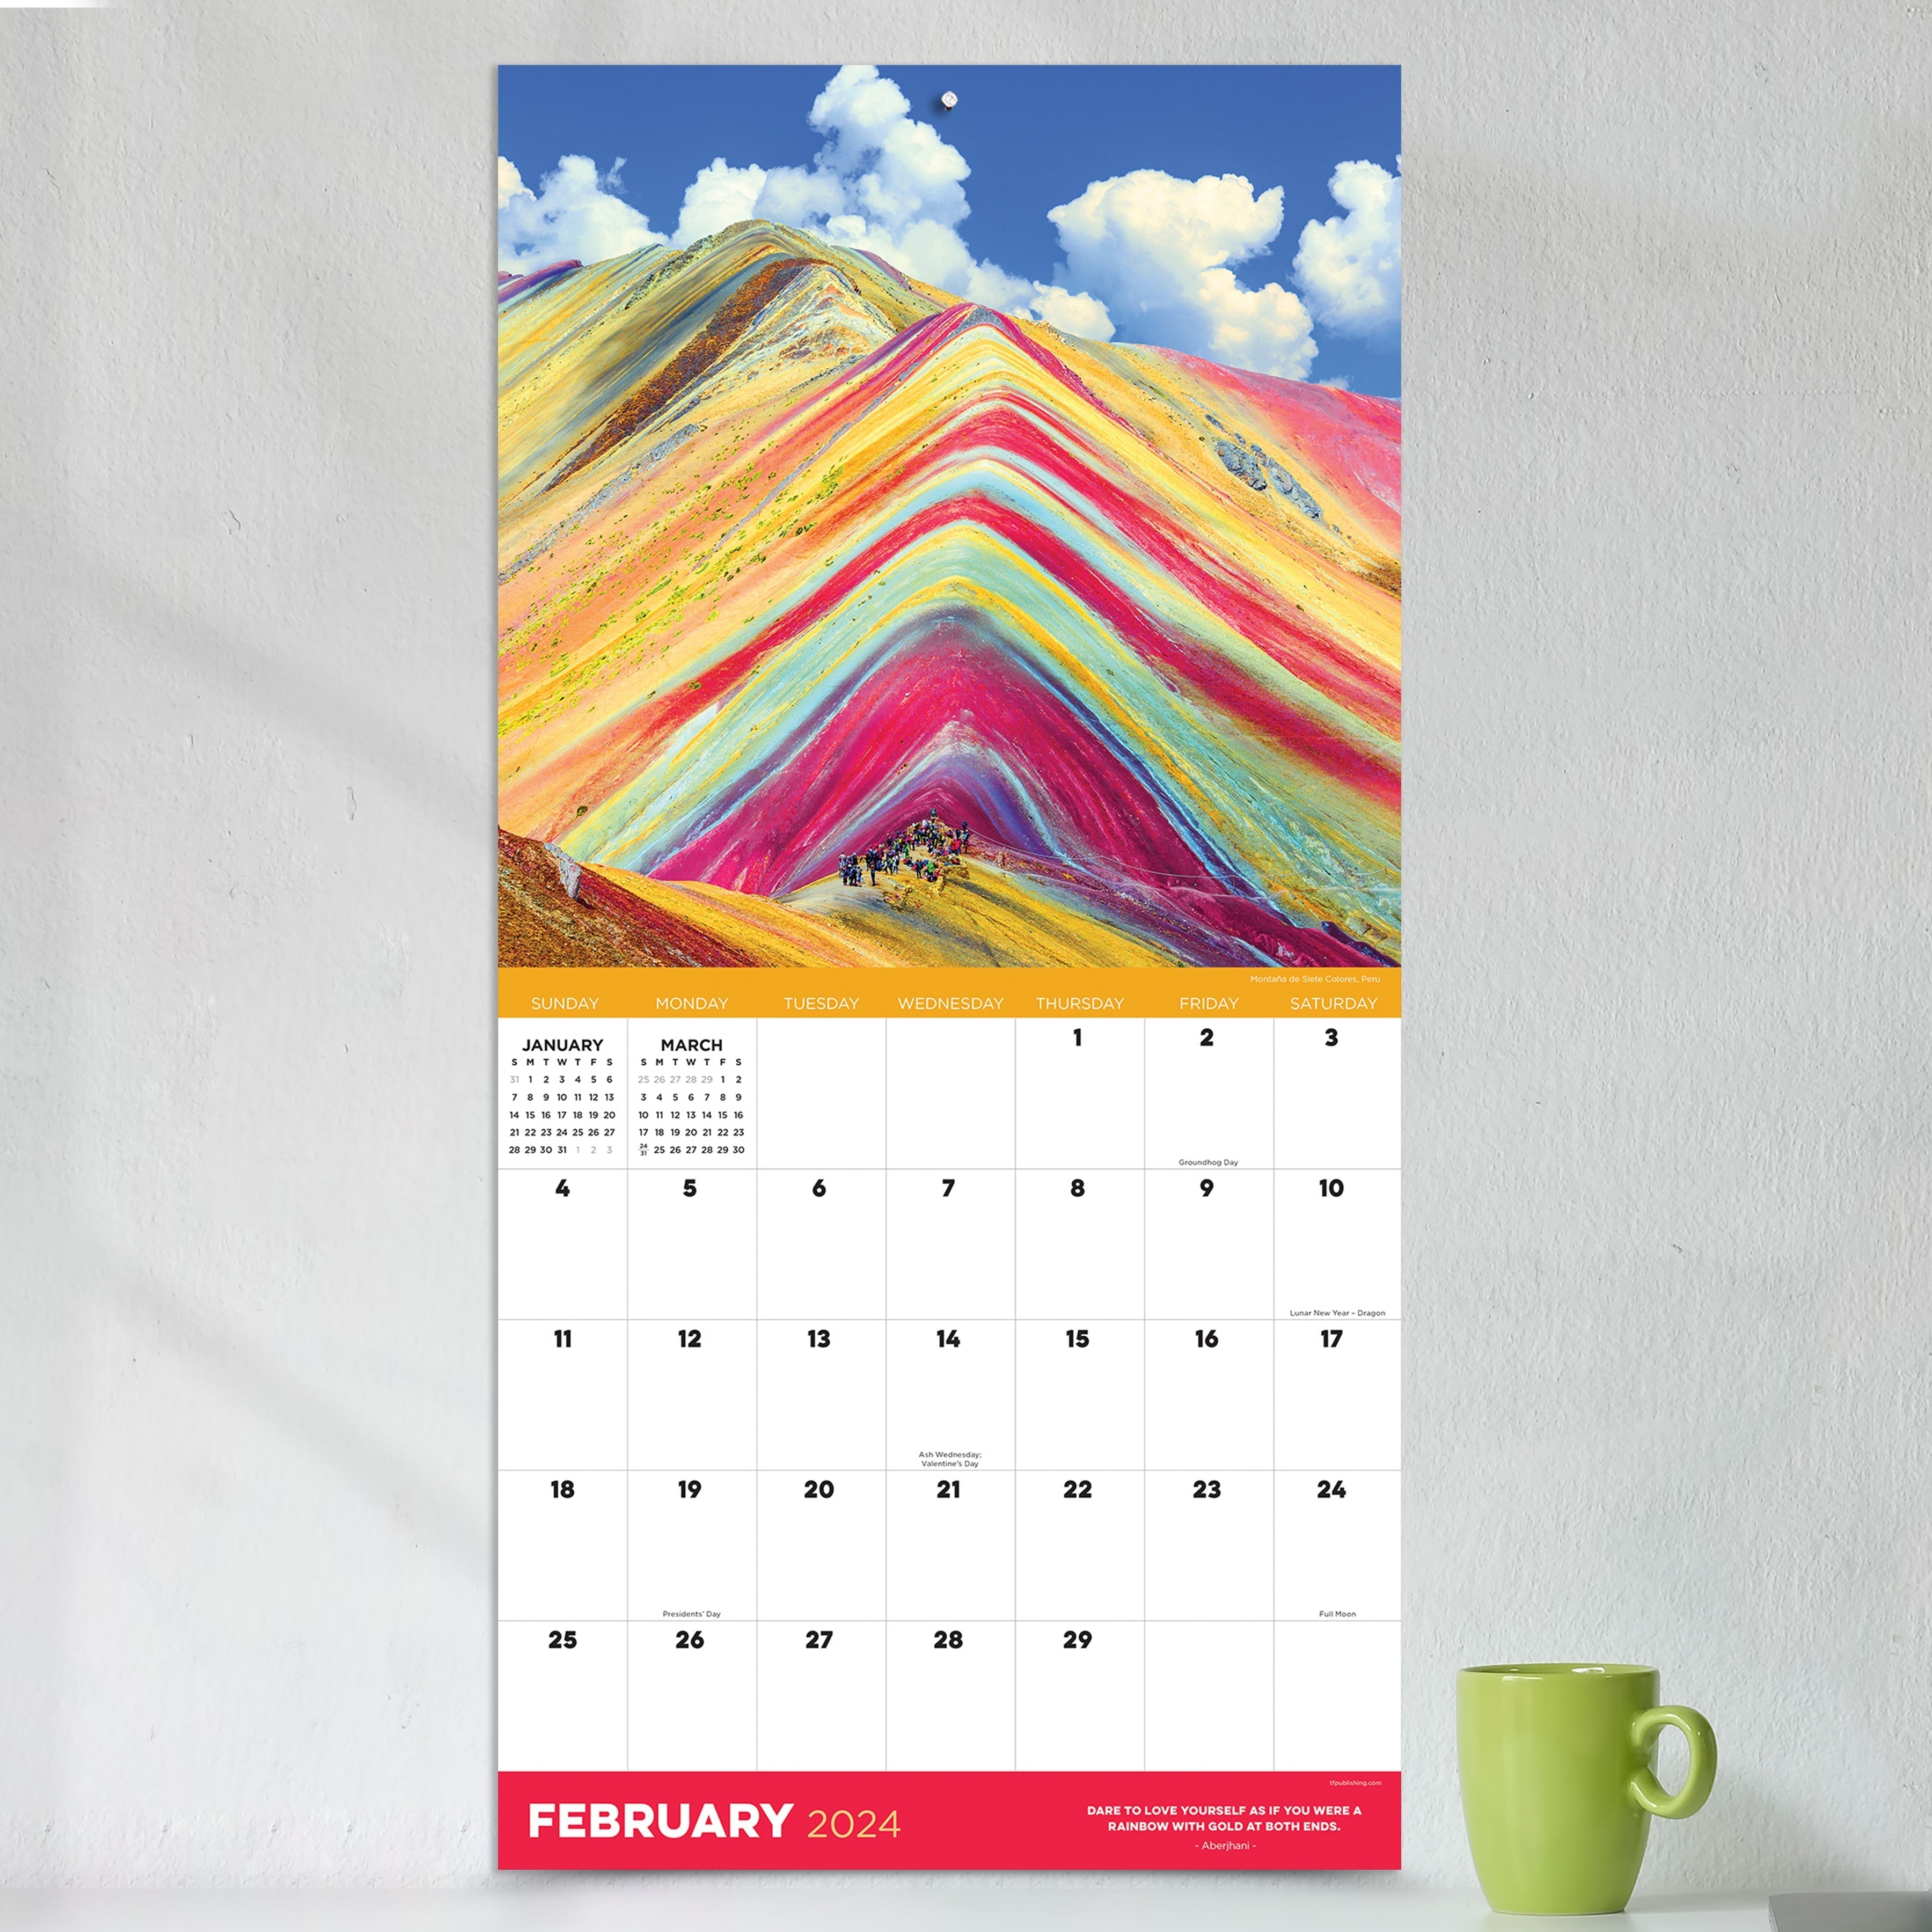 2024 Destination: Rainbow - Square Wall Calendar